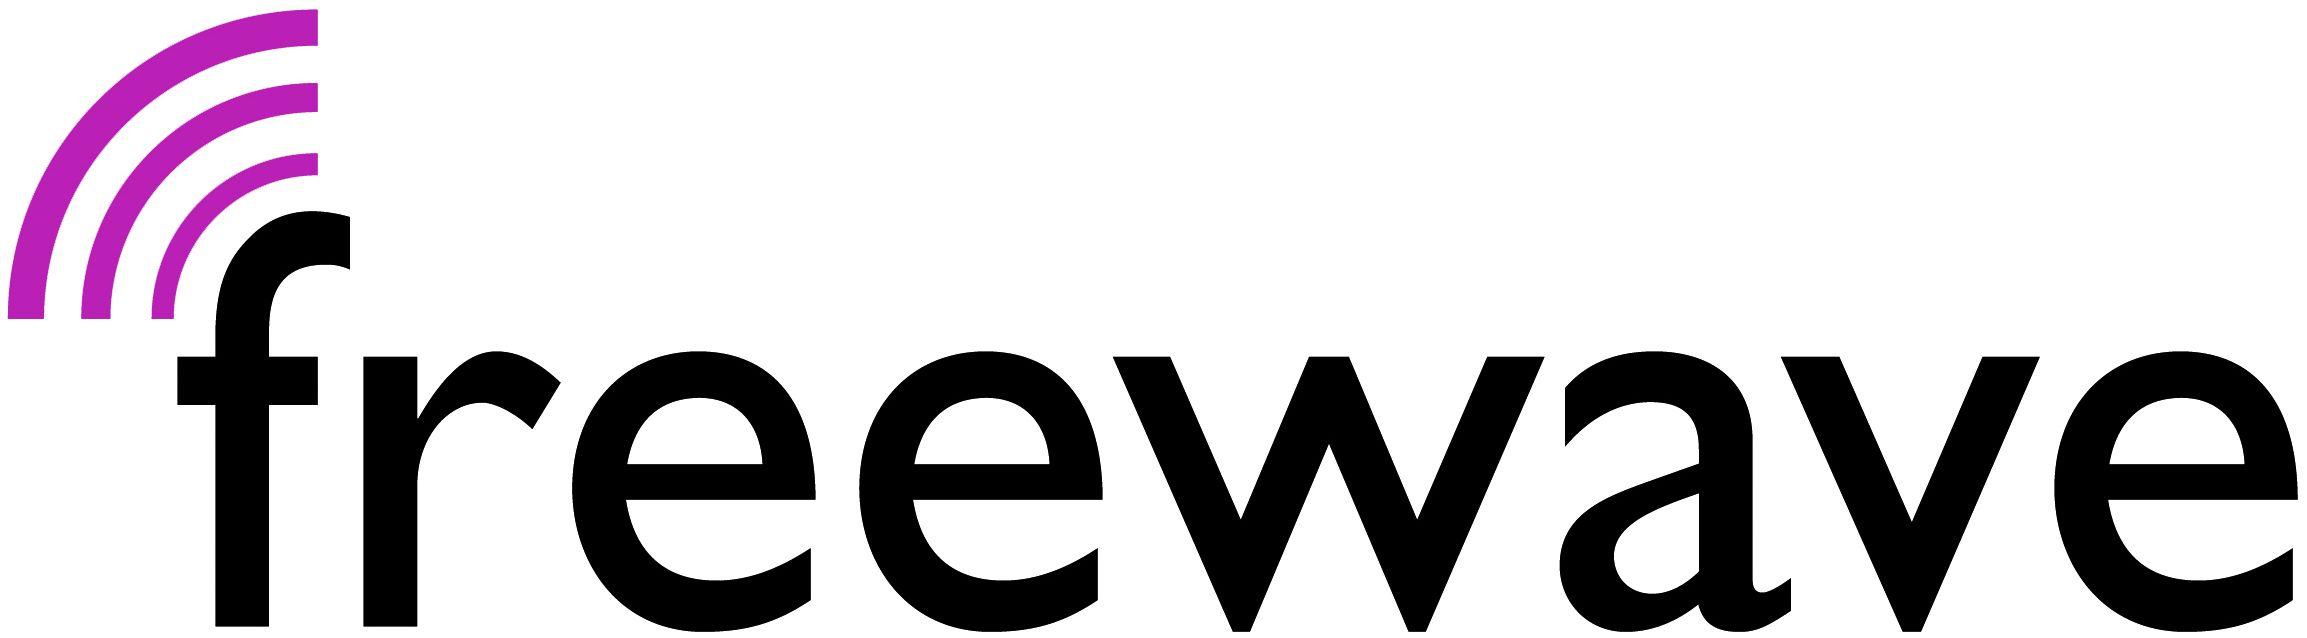 FreeWave Logo - ostermarkt.co.at | Der Markt